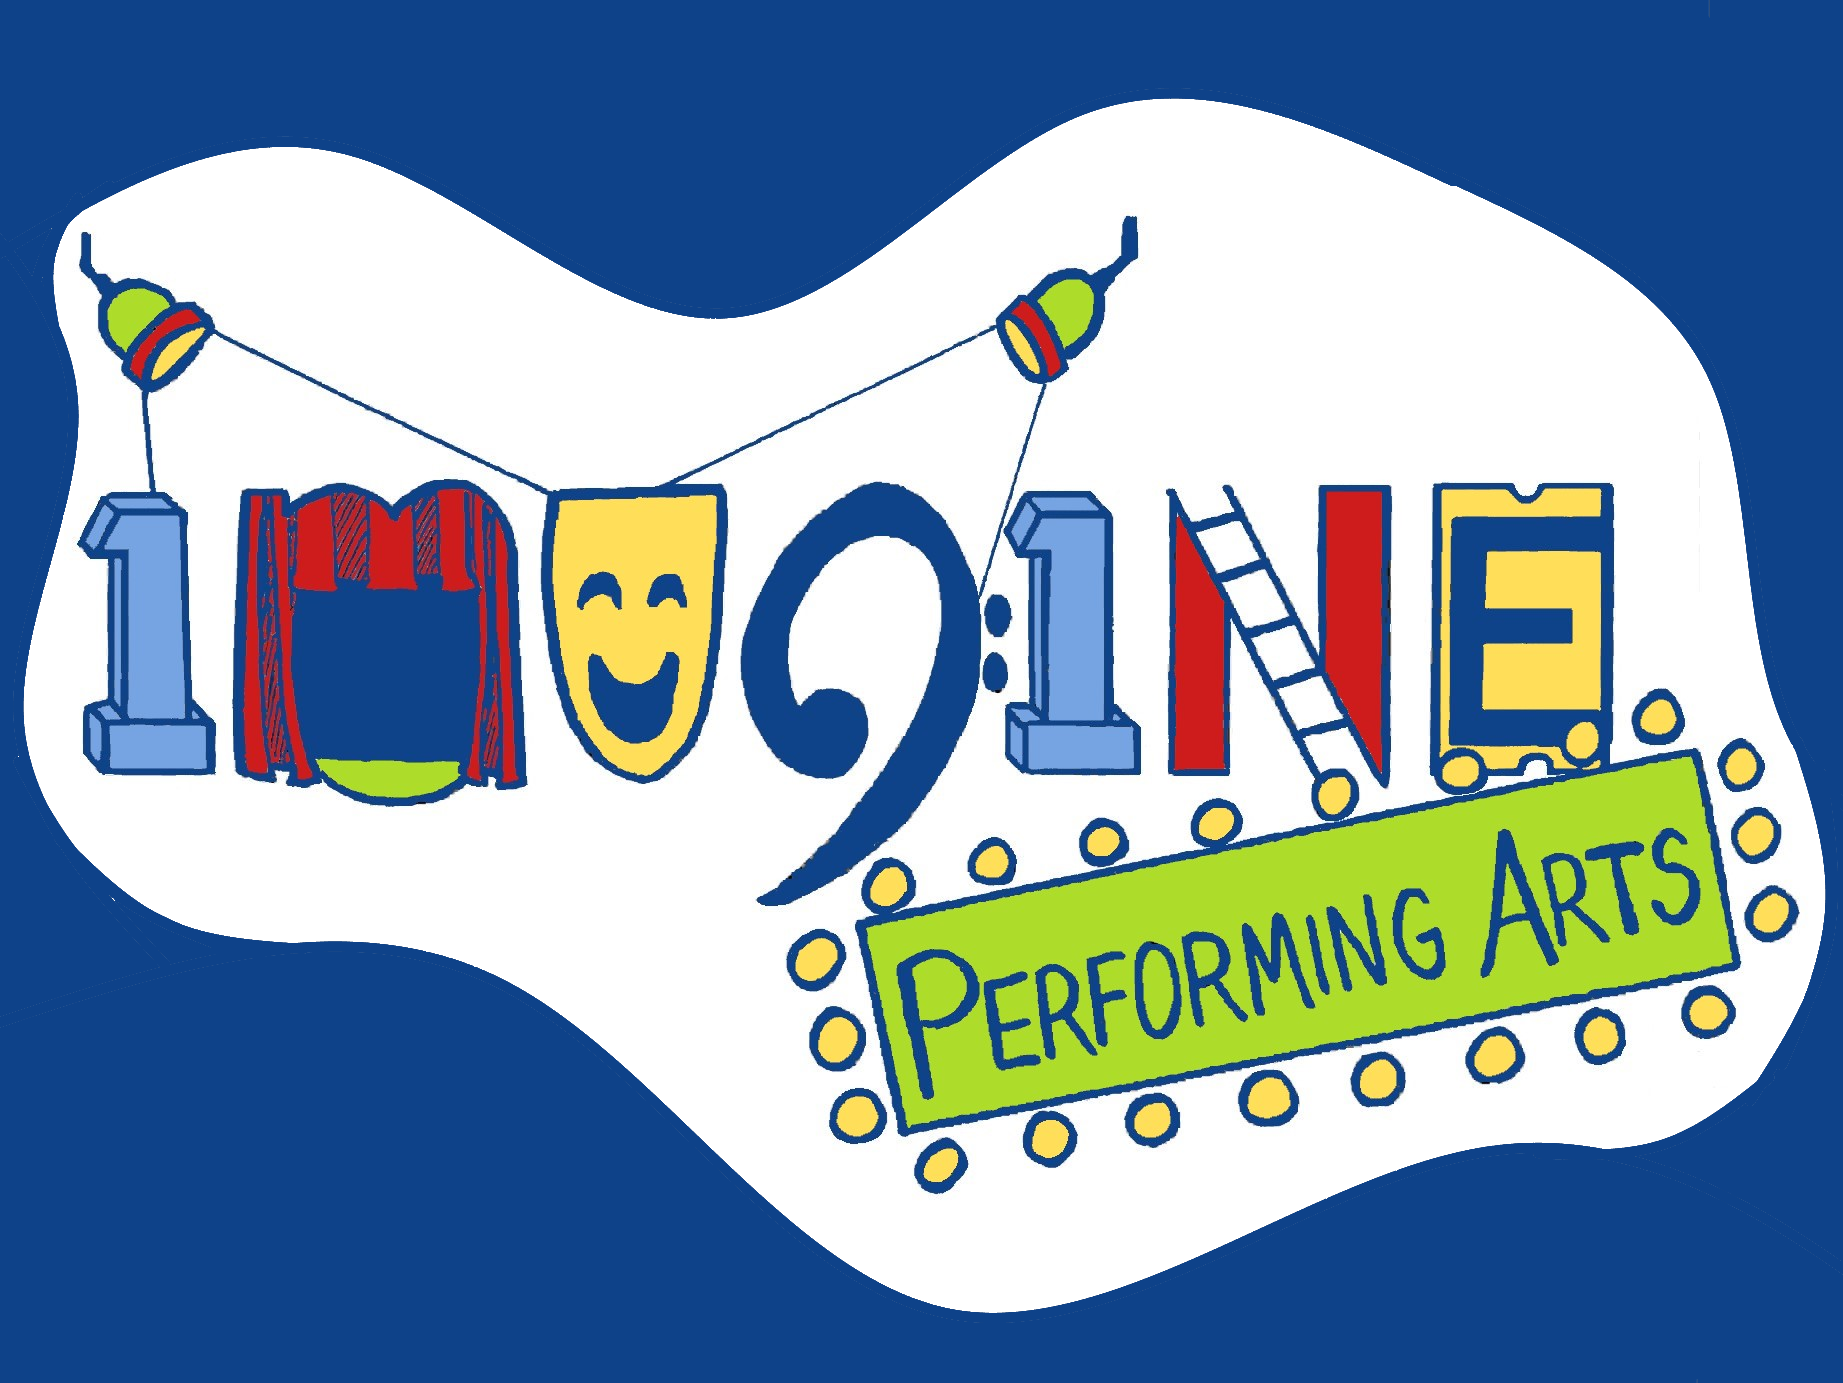 performing arts logo